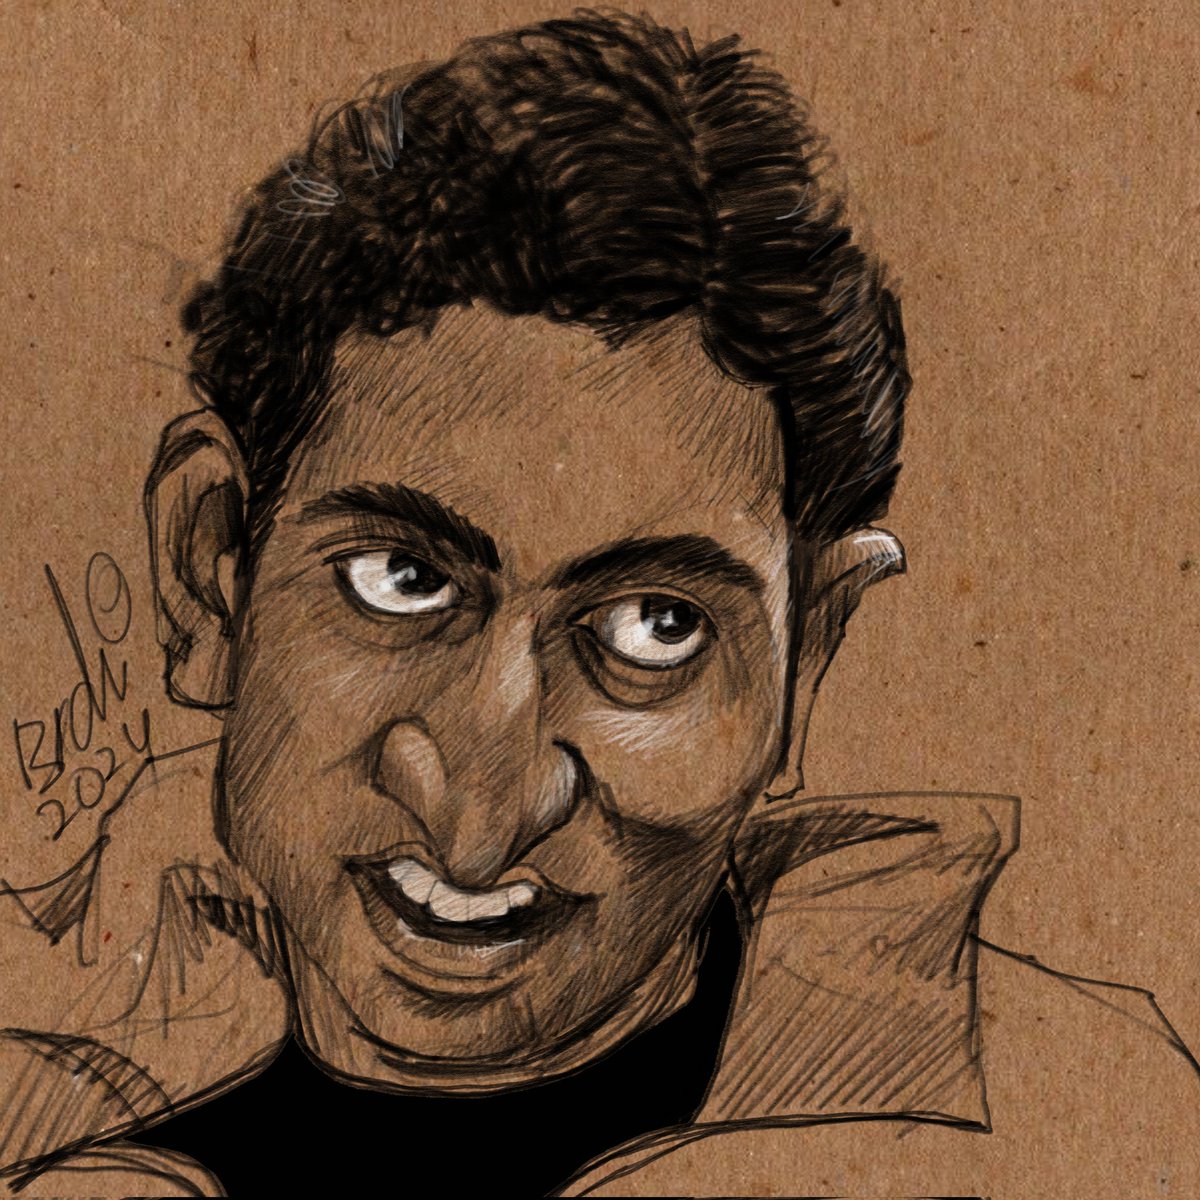 February - 5th #AbhishekBachchan #caricaturesbybadri #Caricatura #caricature #caricatures #art #digitalart #drawing #openforcommission #commissionsopen #caricatureresolution